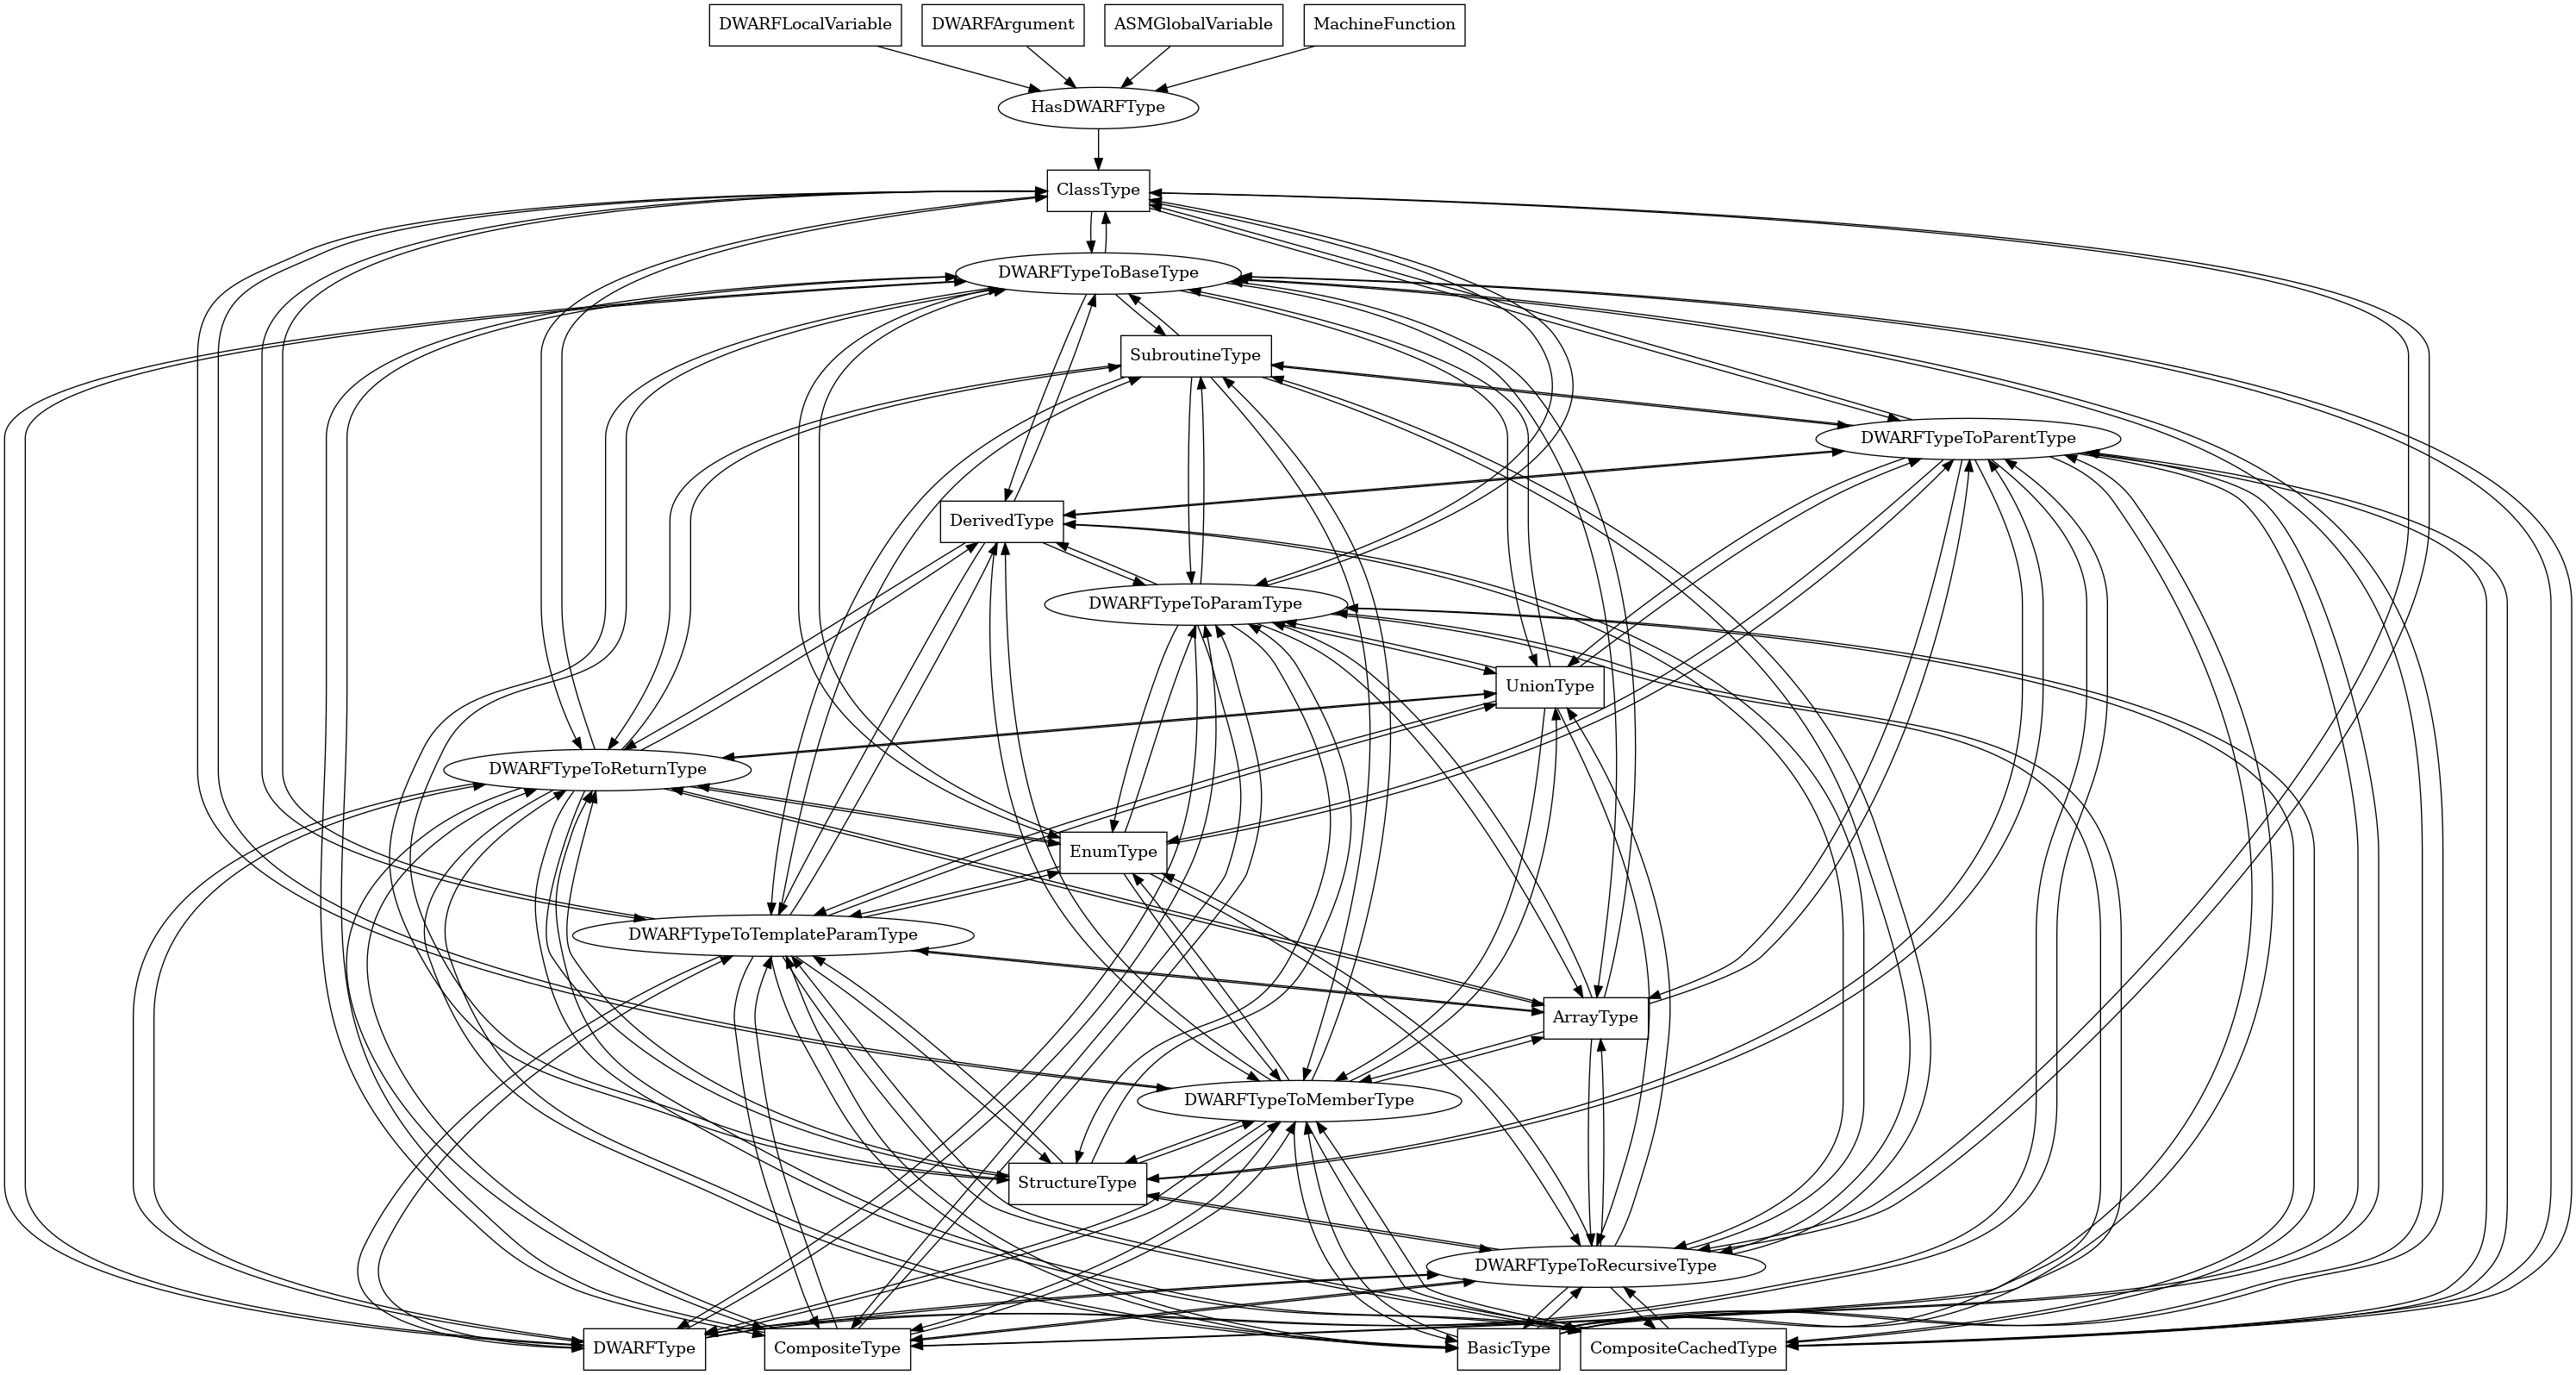 Entity-relationship diagram for ClassType nodes